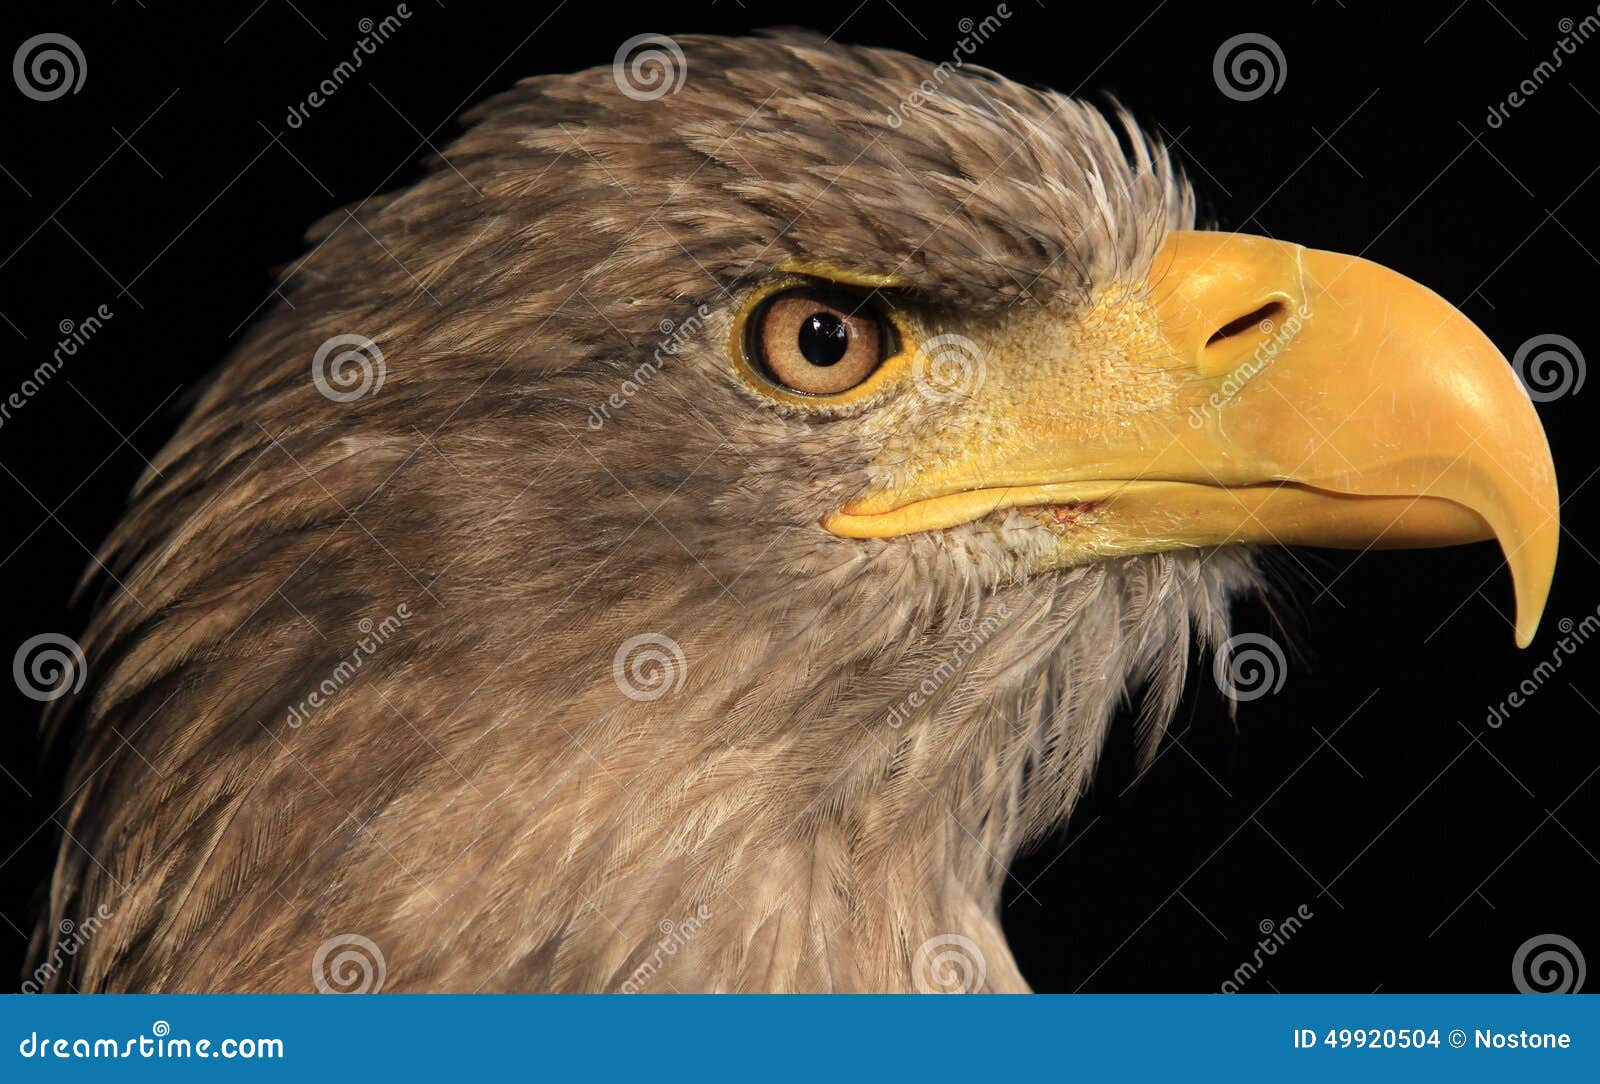 Eagle stock photo. Image of claws, bird, sharp, beak - 49920504